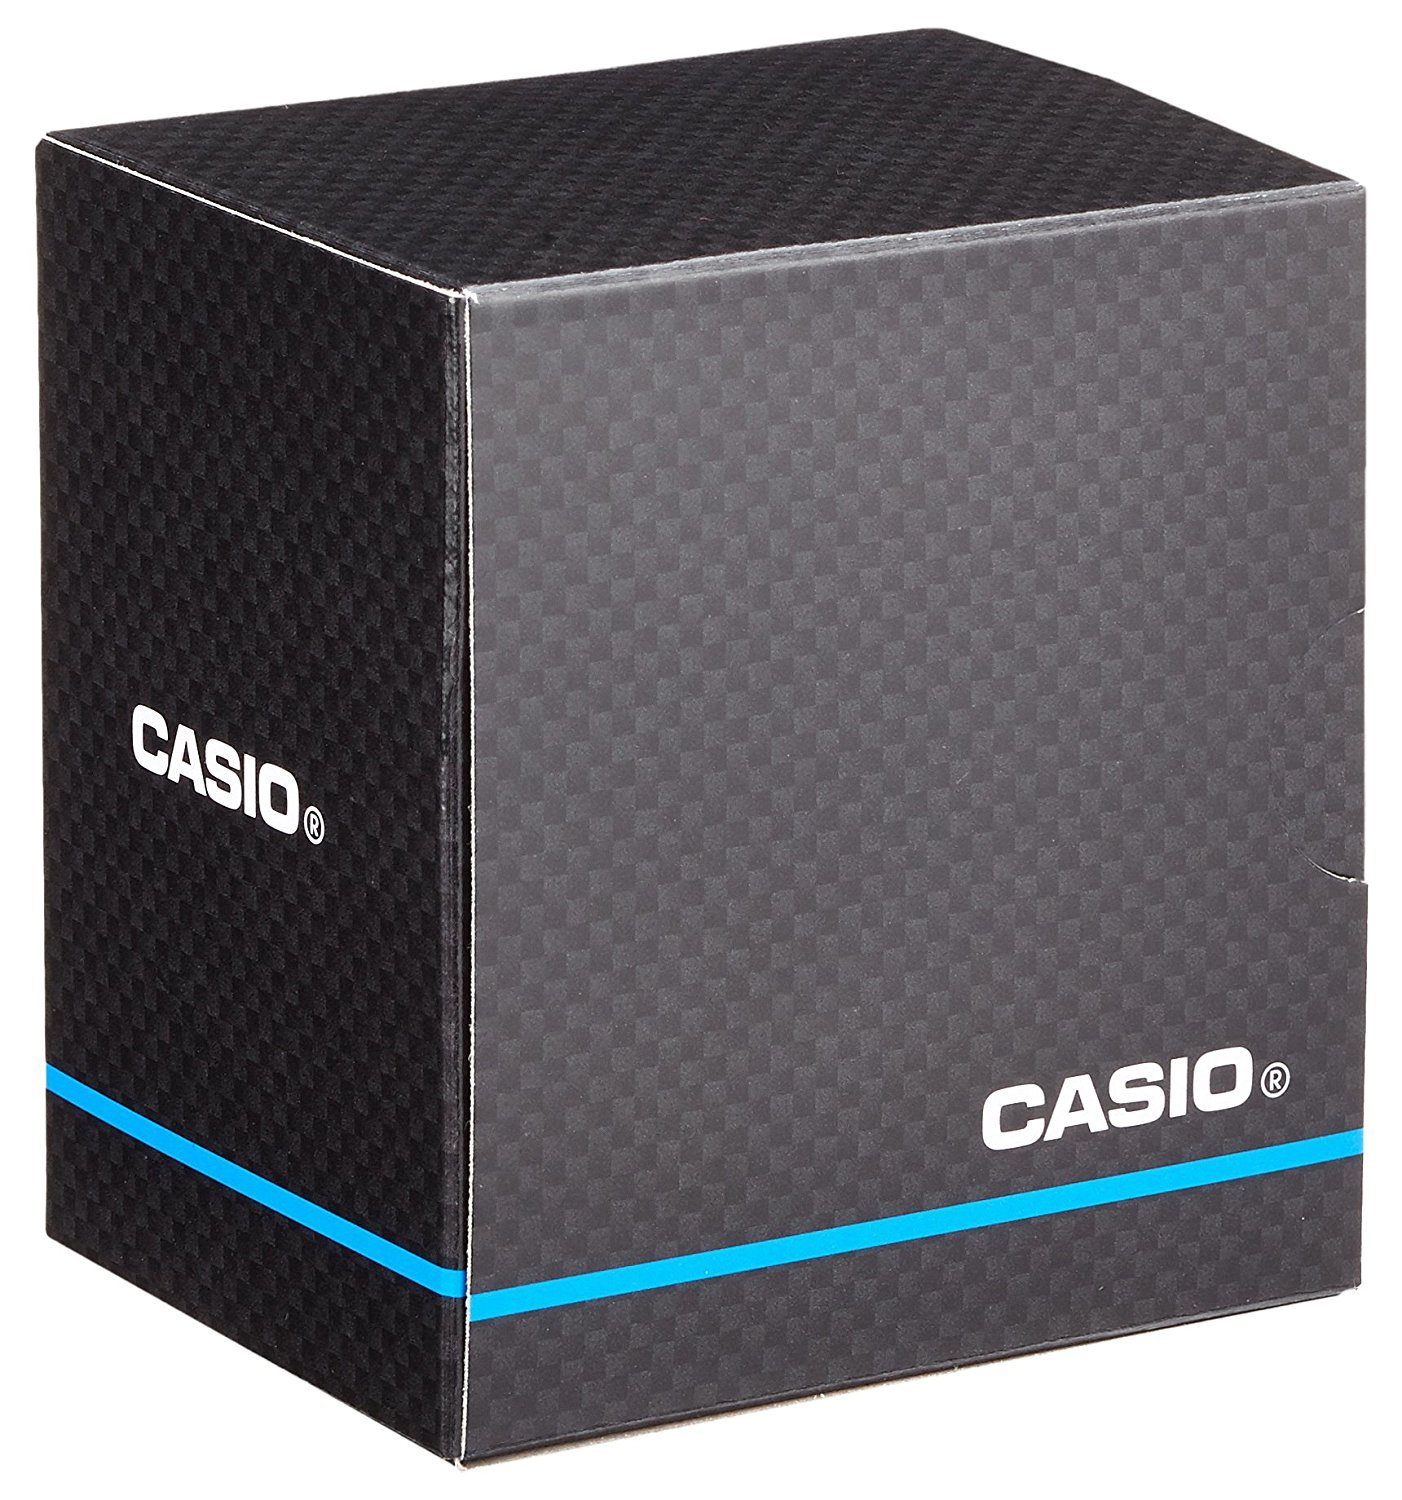 Casio Casual Watch MQ-24UC-3BEF, Black, Casual